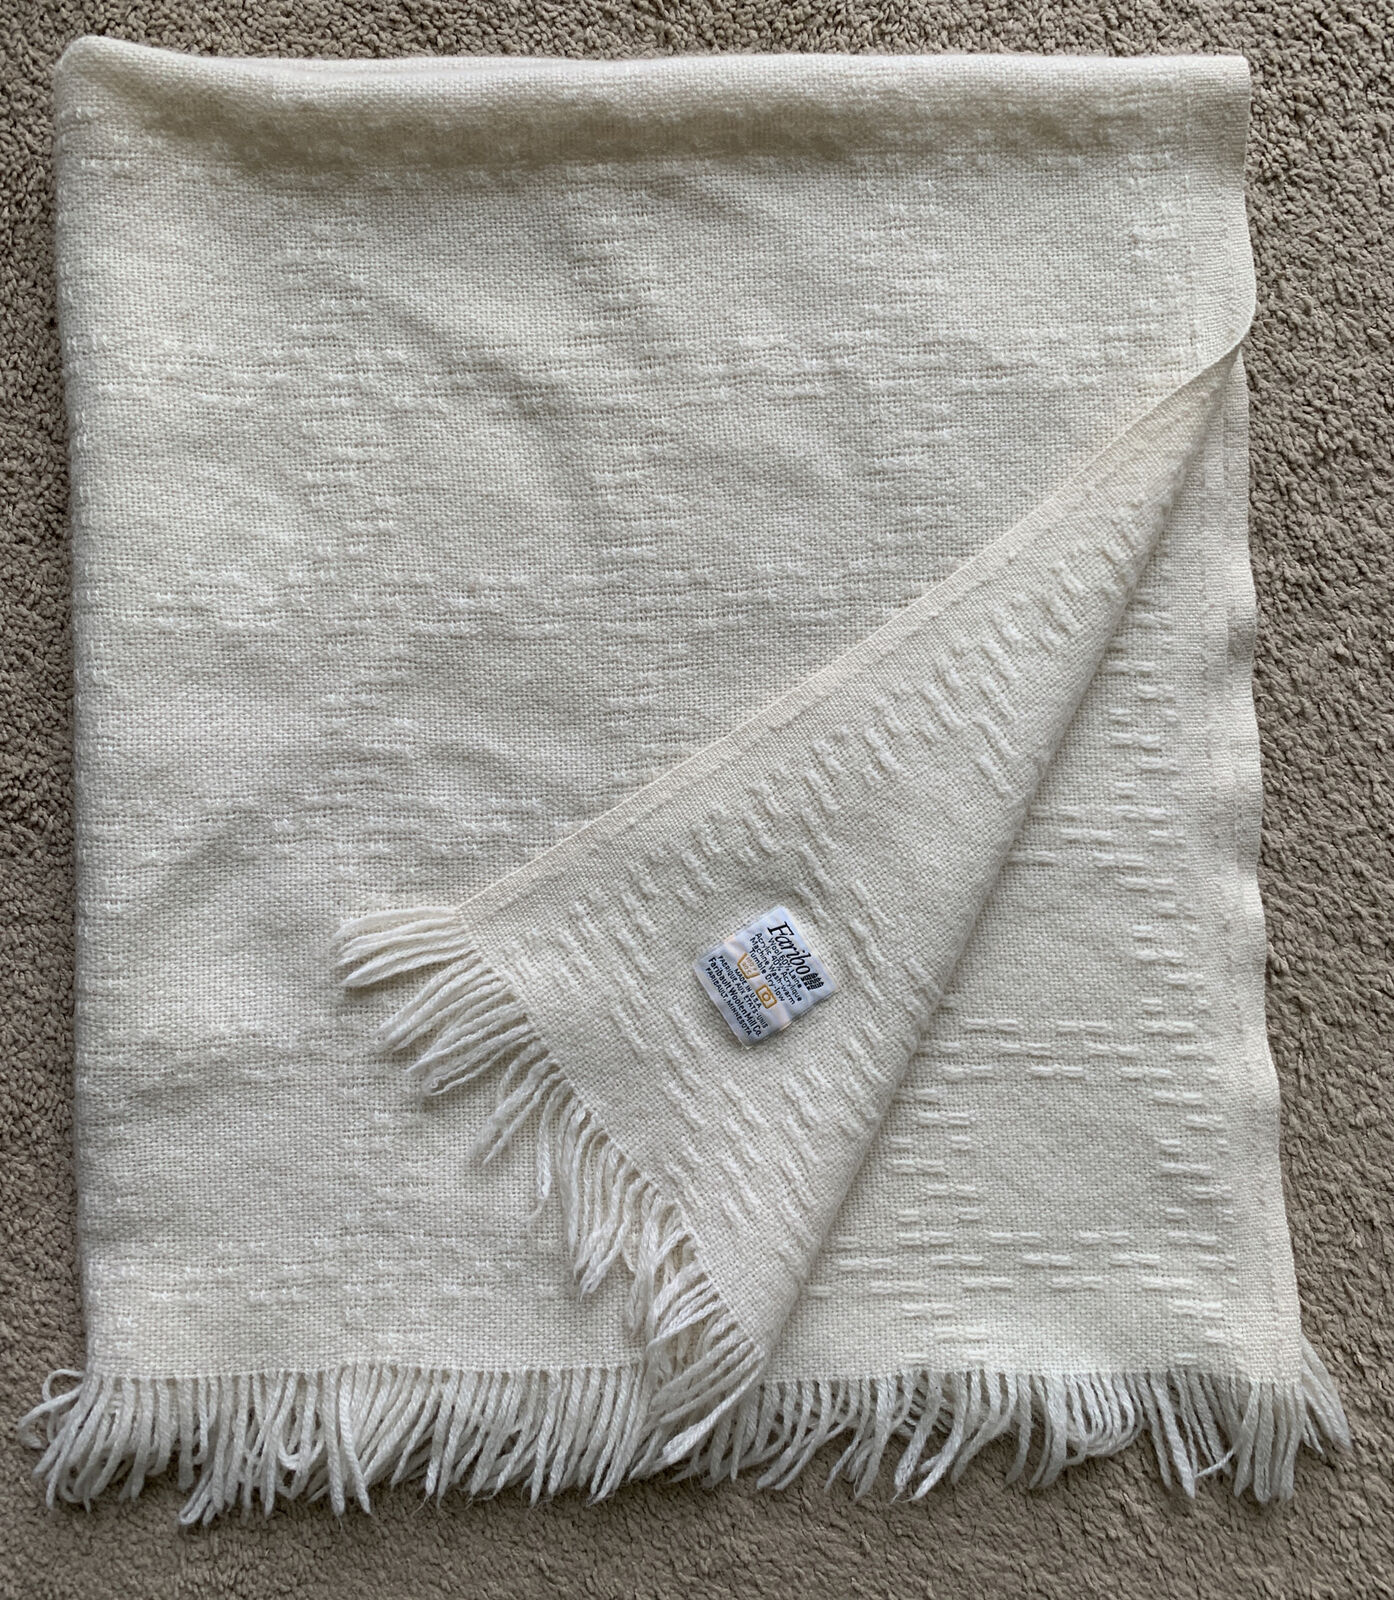 Faribo Wool Acrylic Warm Up Throw Car Lap Blanket Fringed Ivory USA Made 45x50”